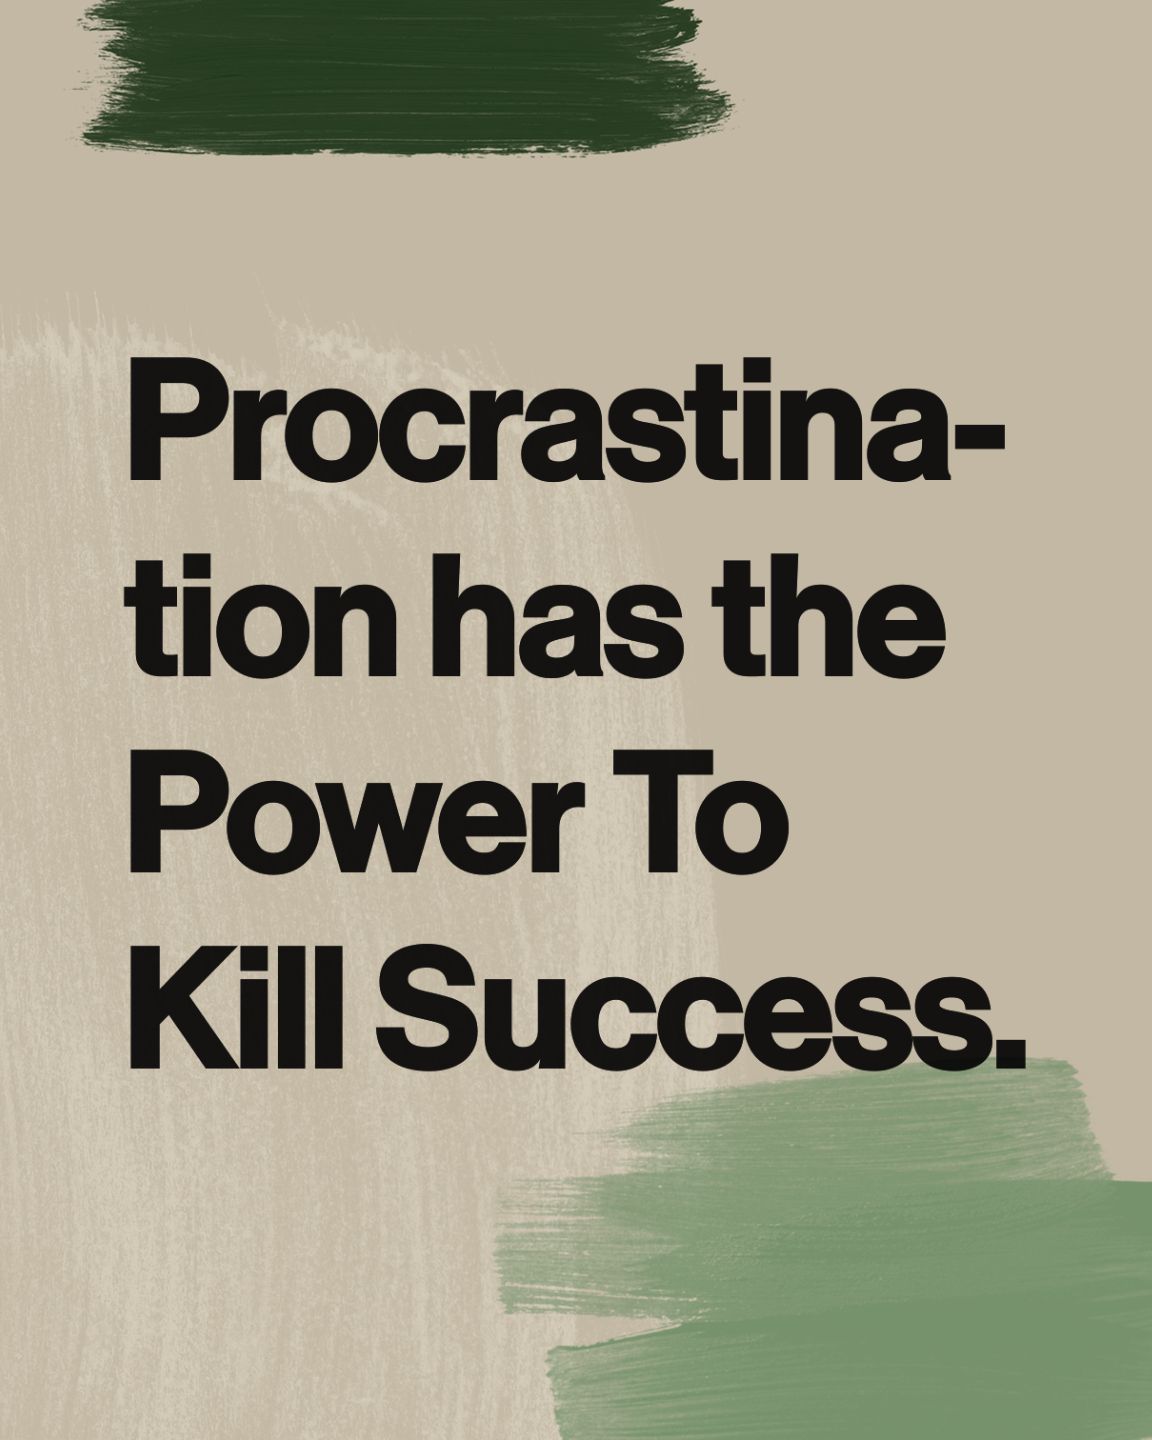 Baune Alois ULKANE on LinkedIn: Procrastination is indeed a virus that ...